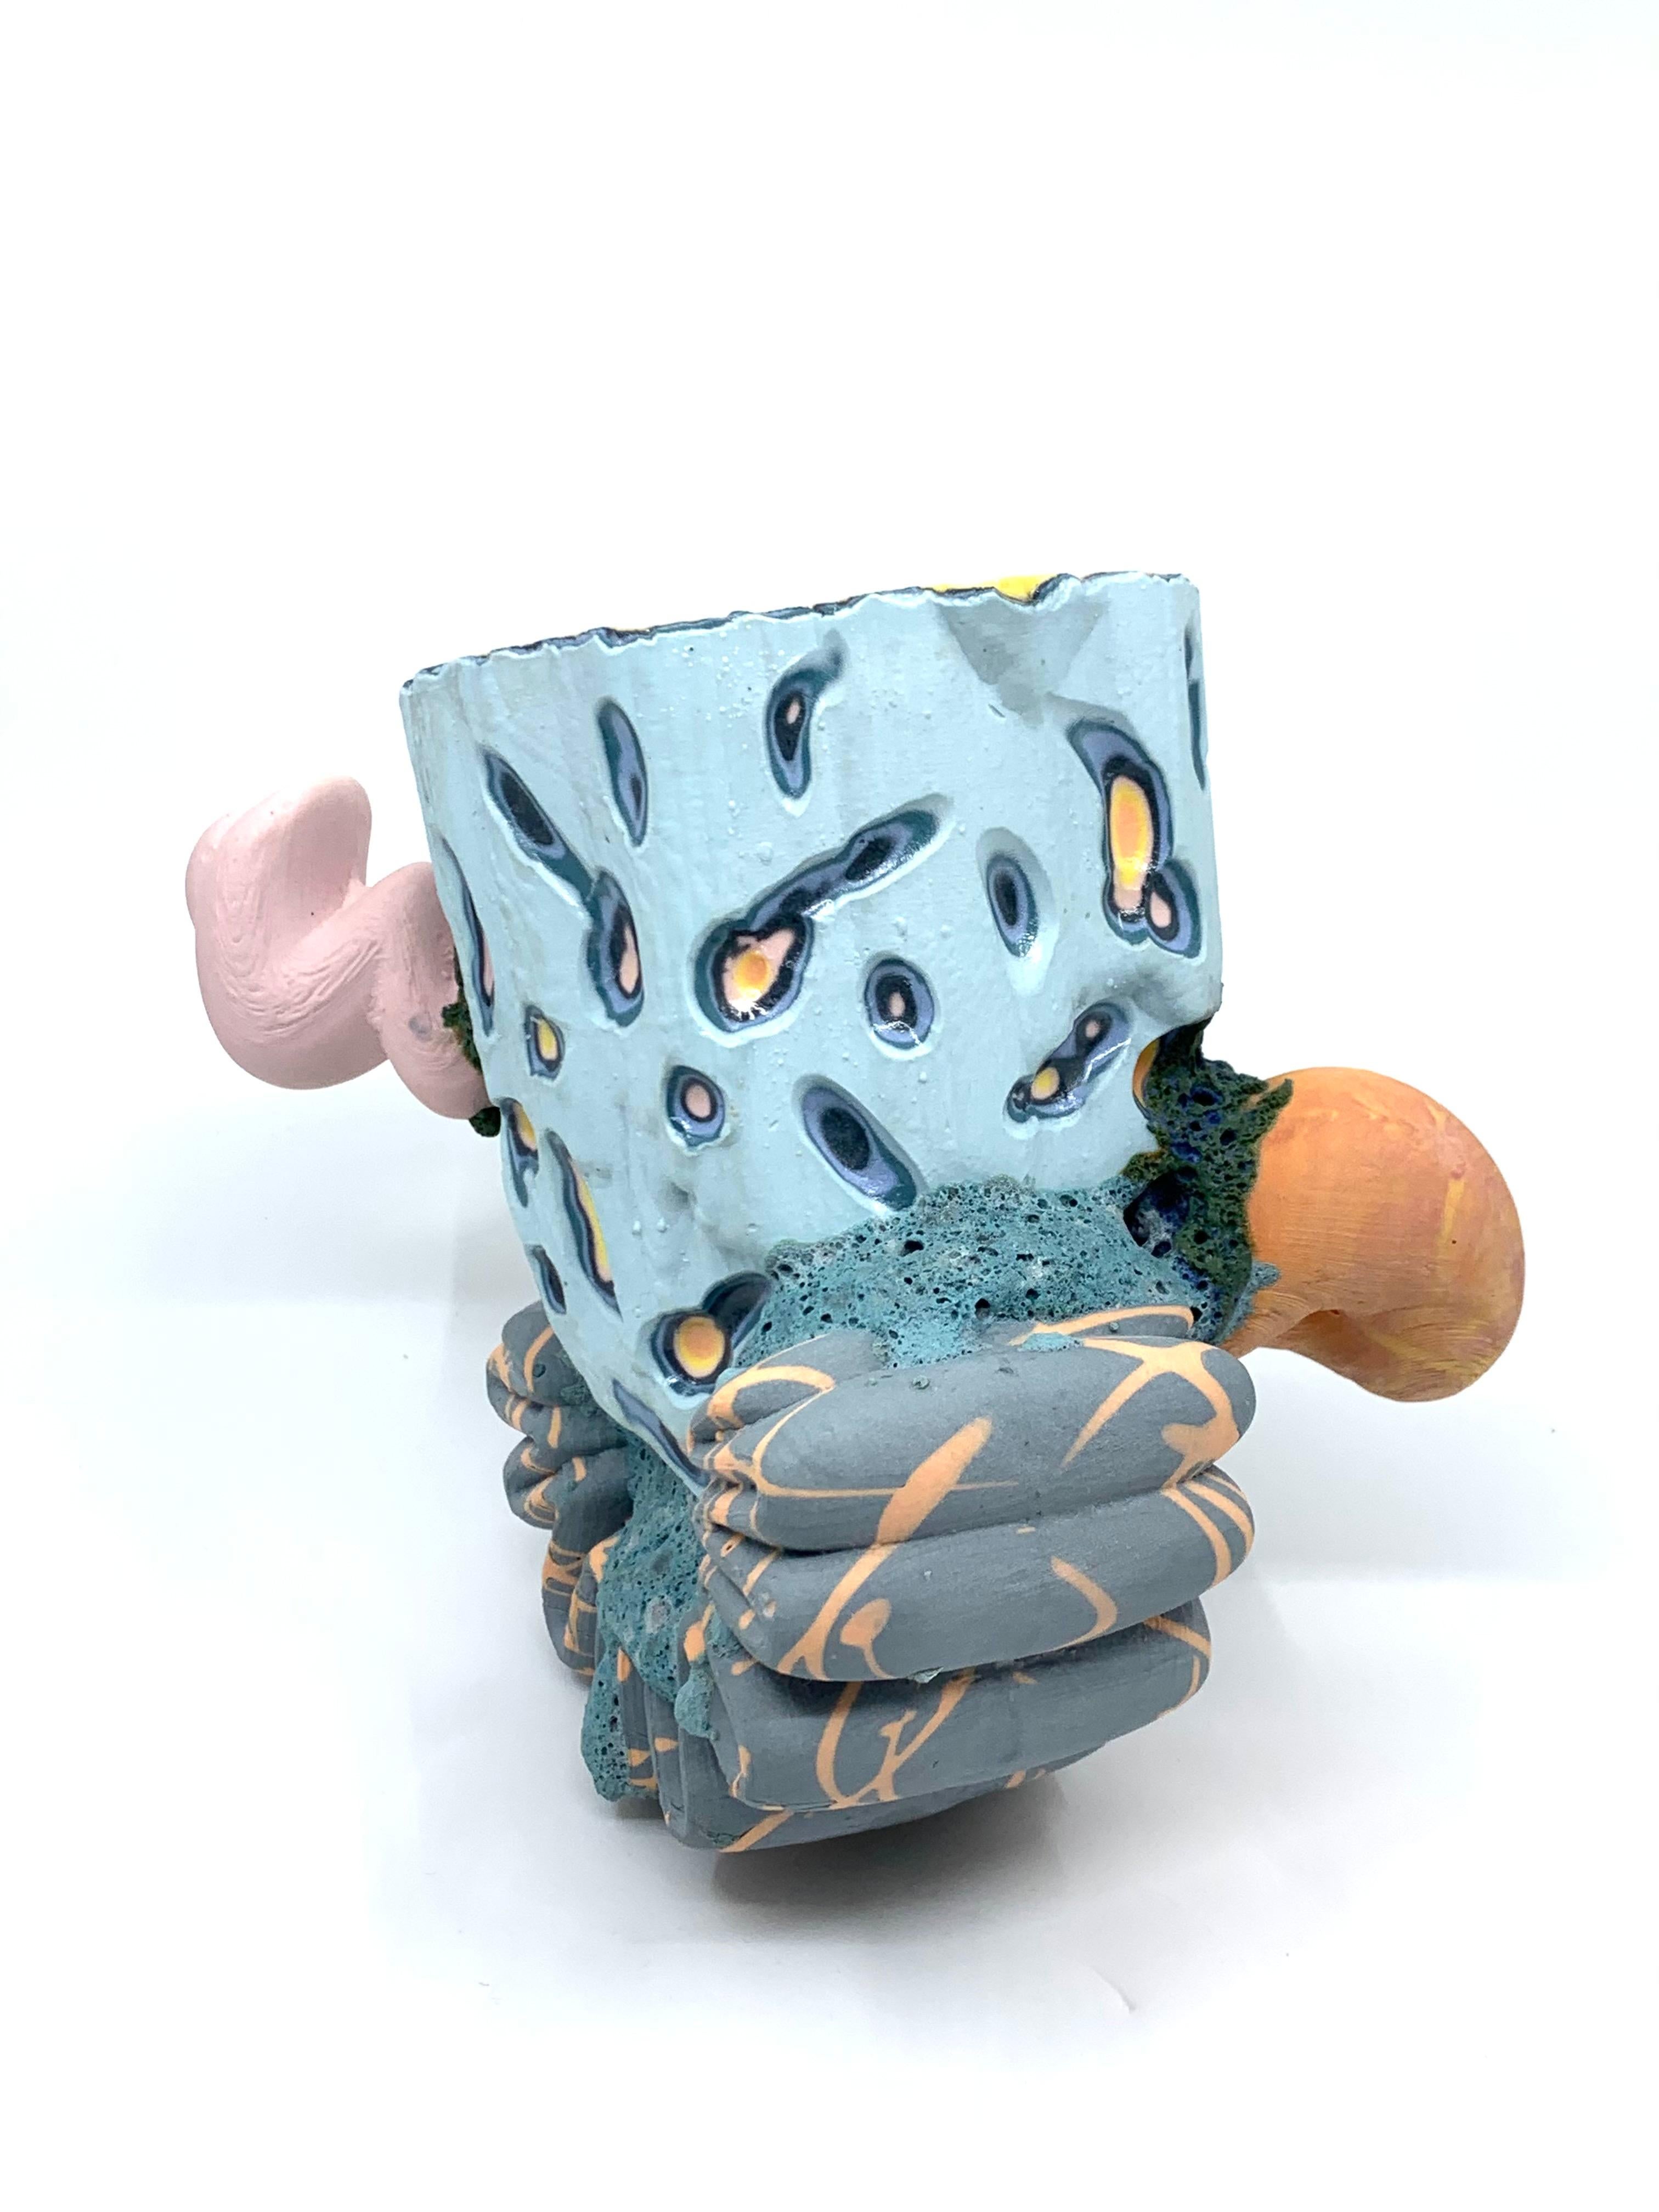 Contemporary, Ceramic, Sculpture, Functional, Cup 2